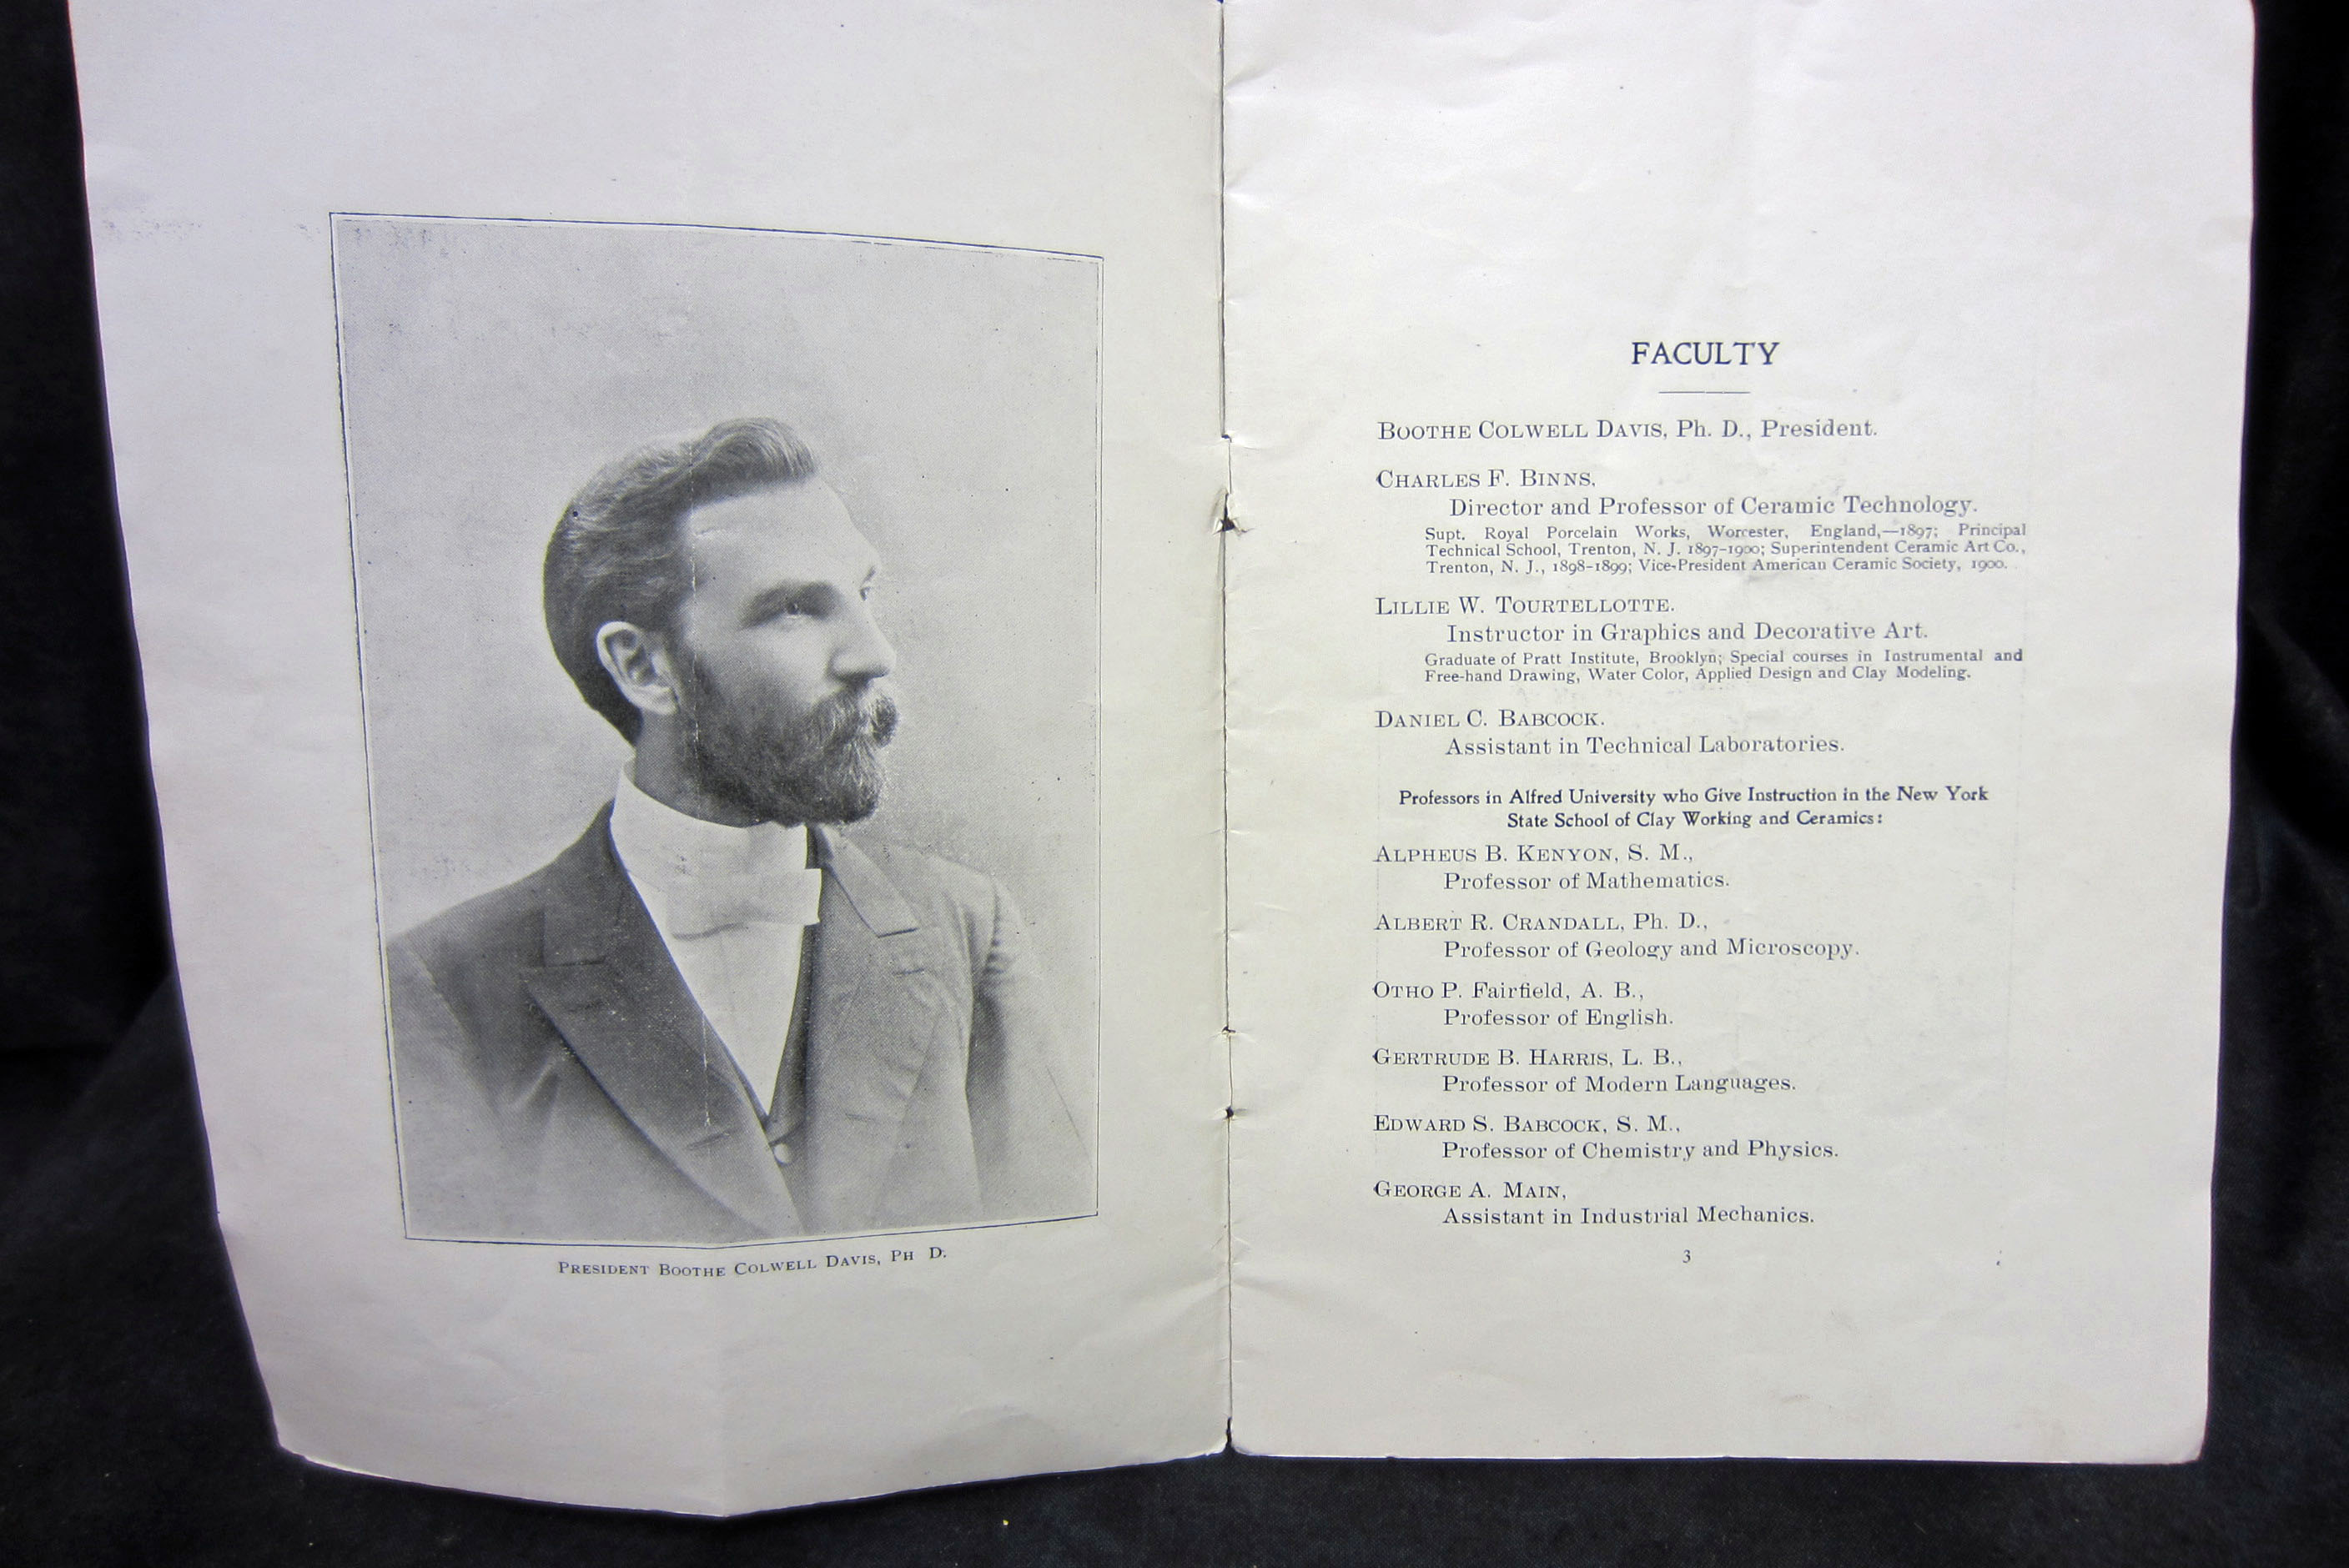 1900-1901 Catalog